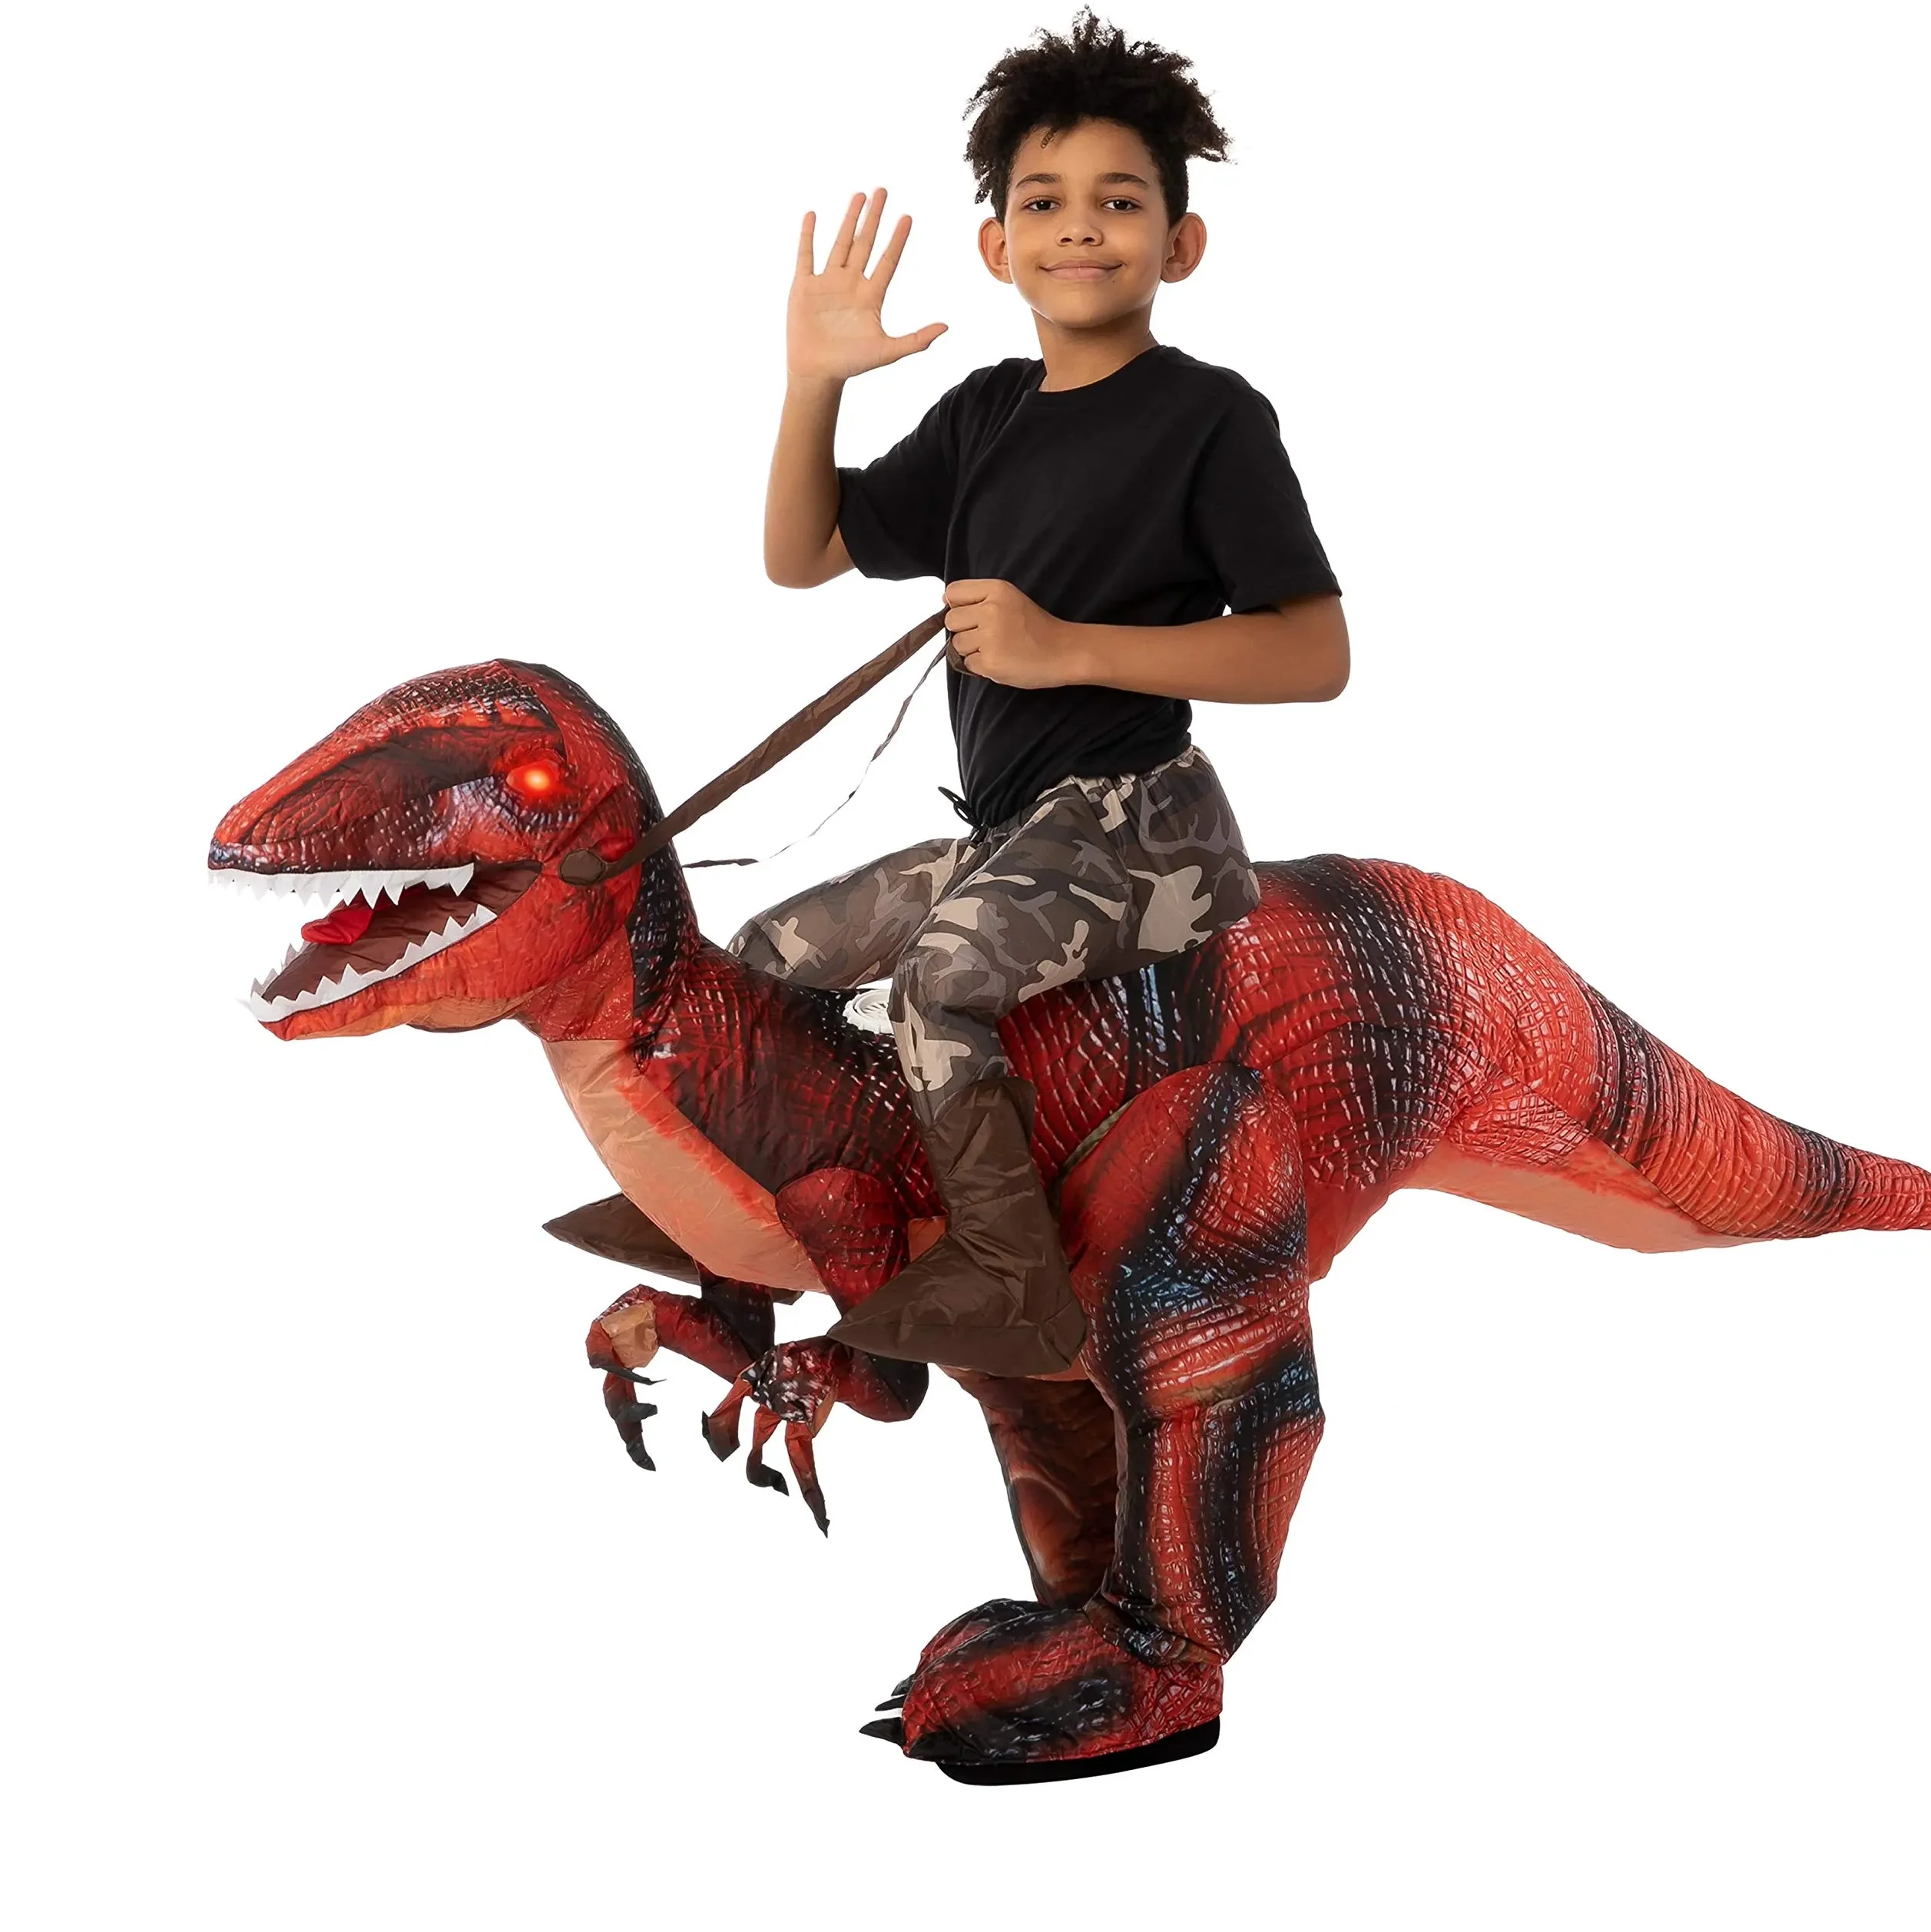 Riding blow up dinosaur costume